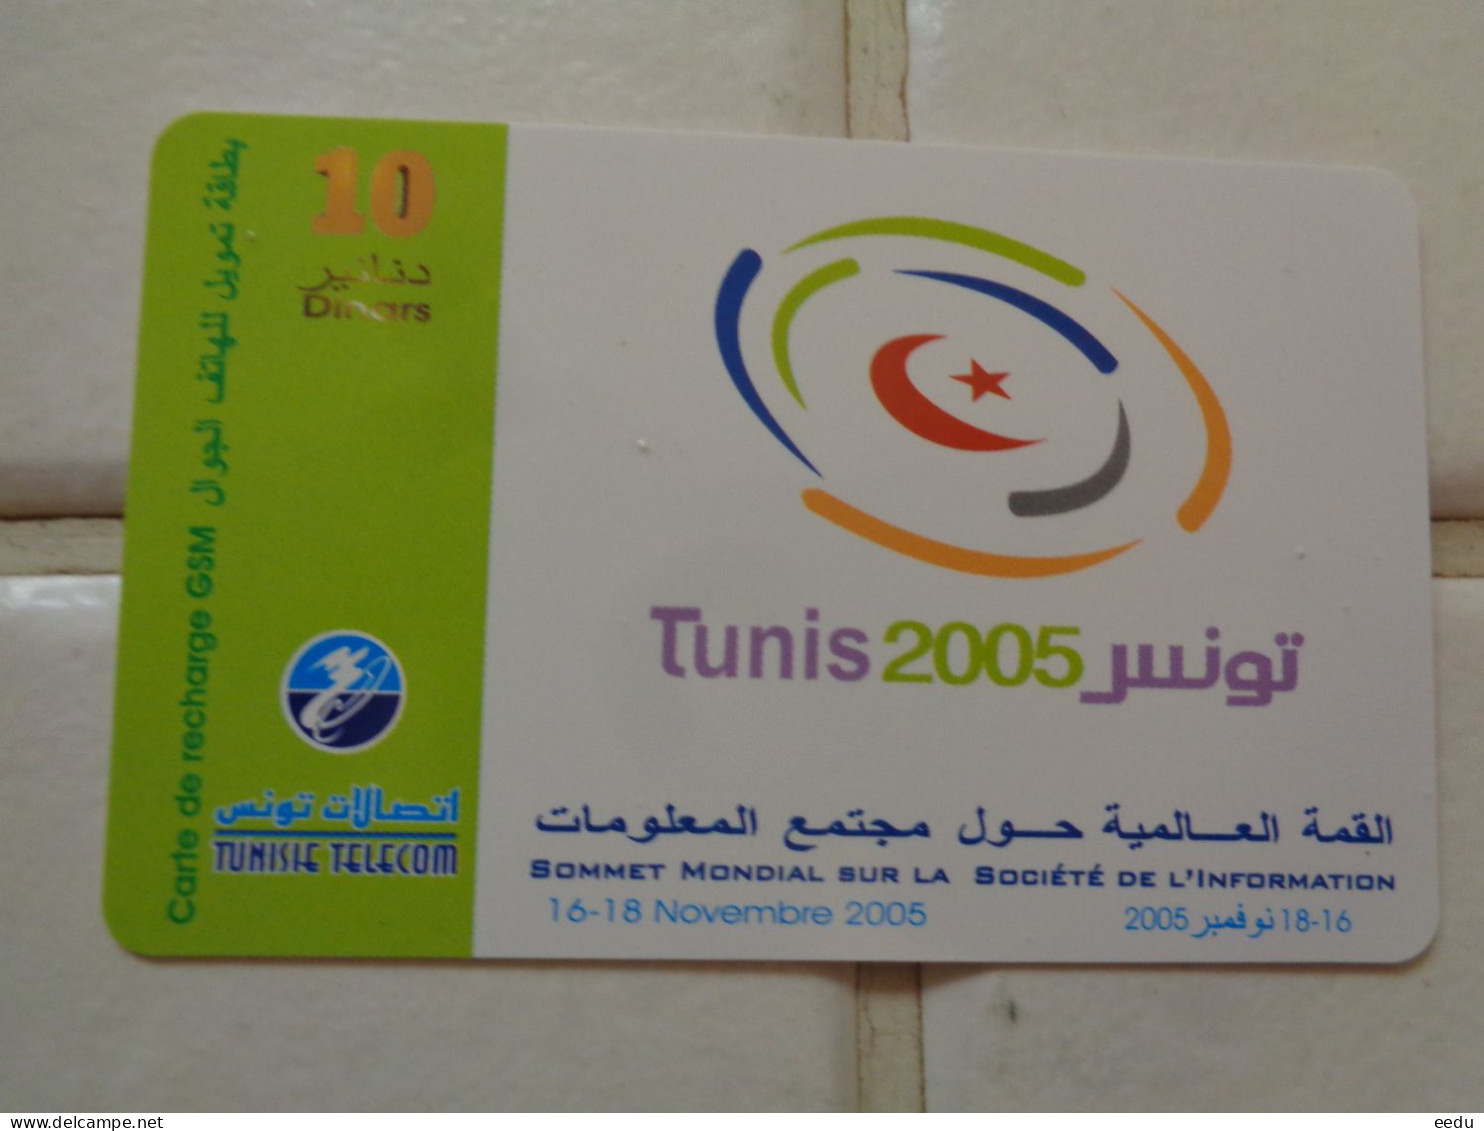 Tunisia Phonecard - Tunesië